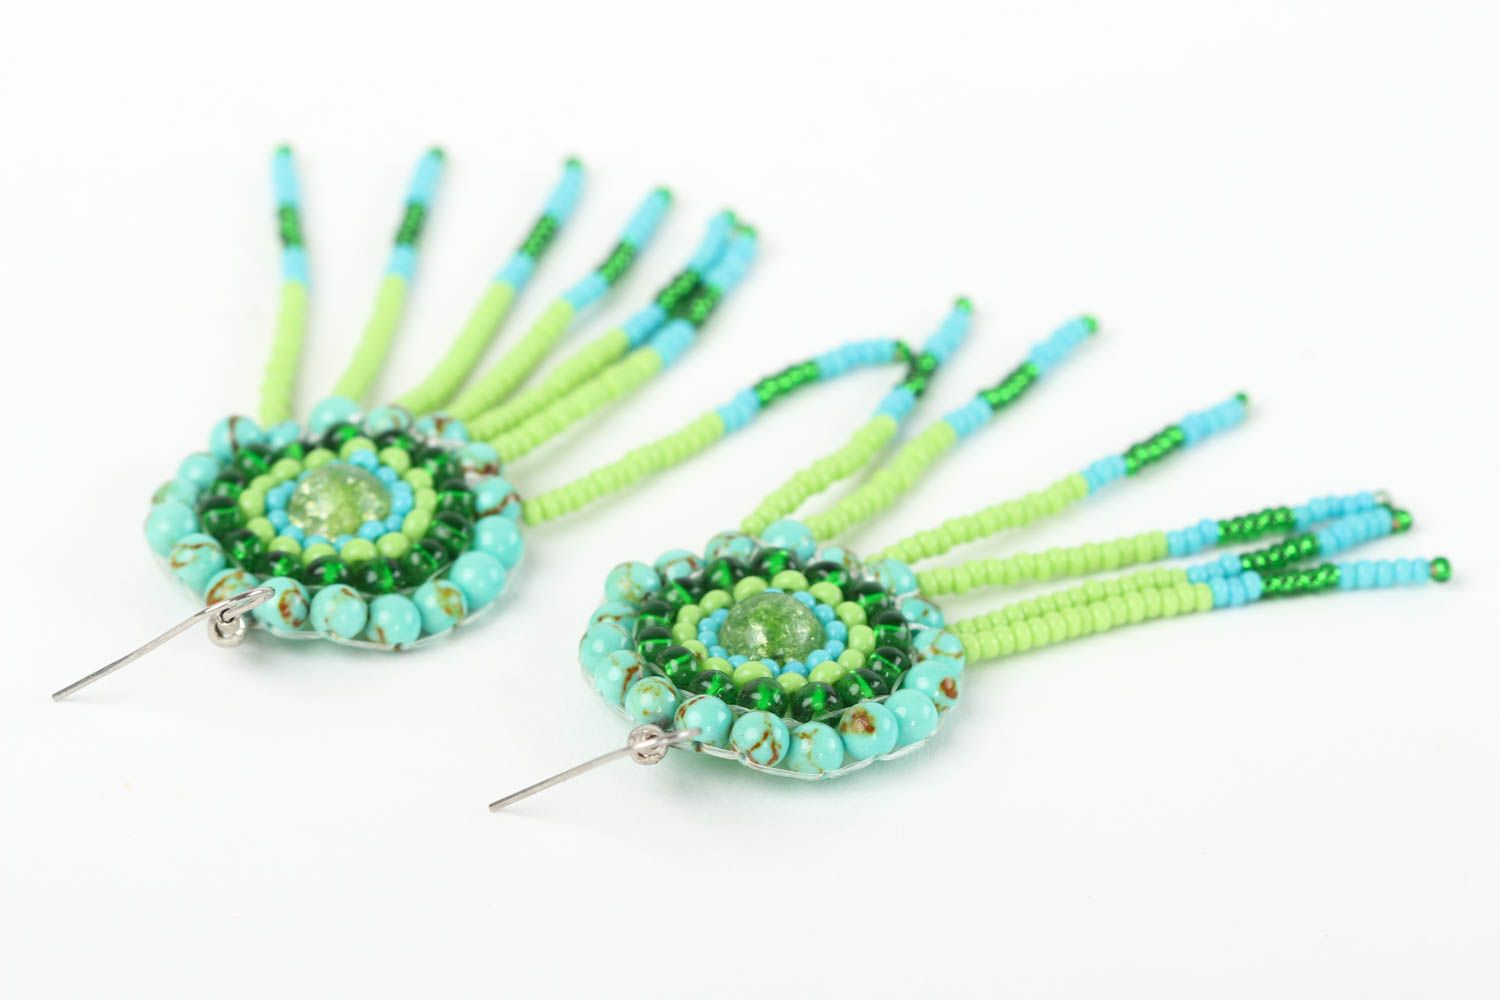 Handmade turquoise earrings jewelry in Indian style designer earrings photo 4